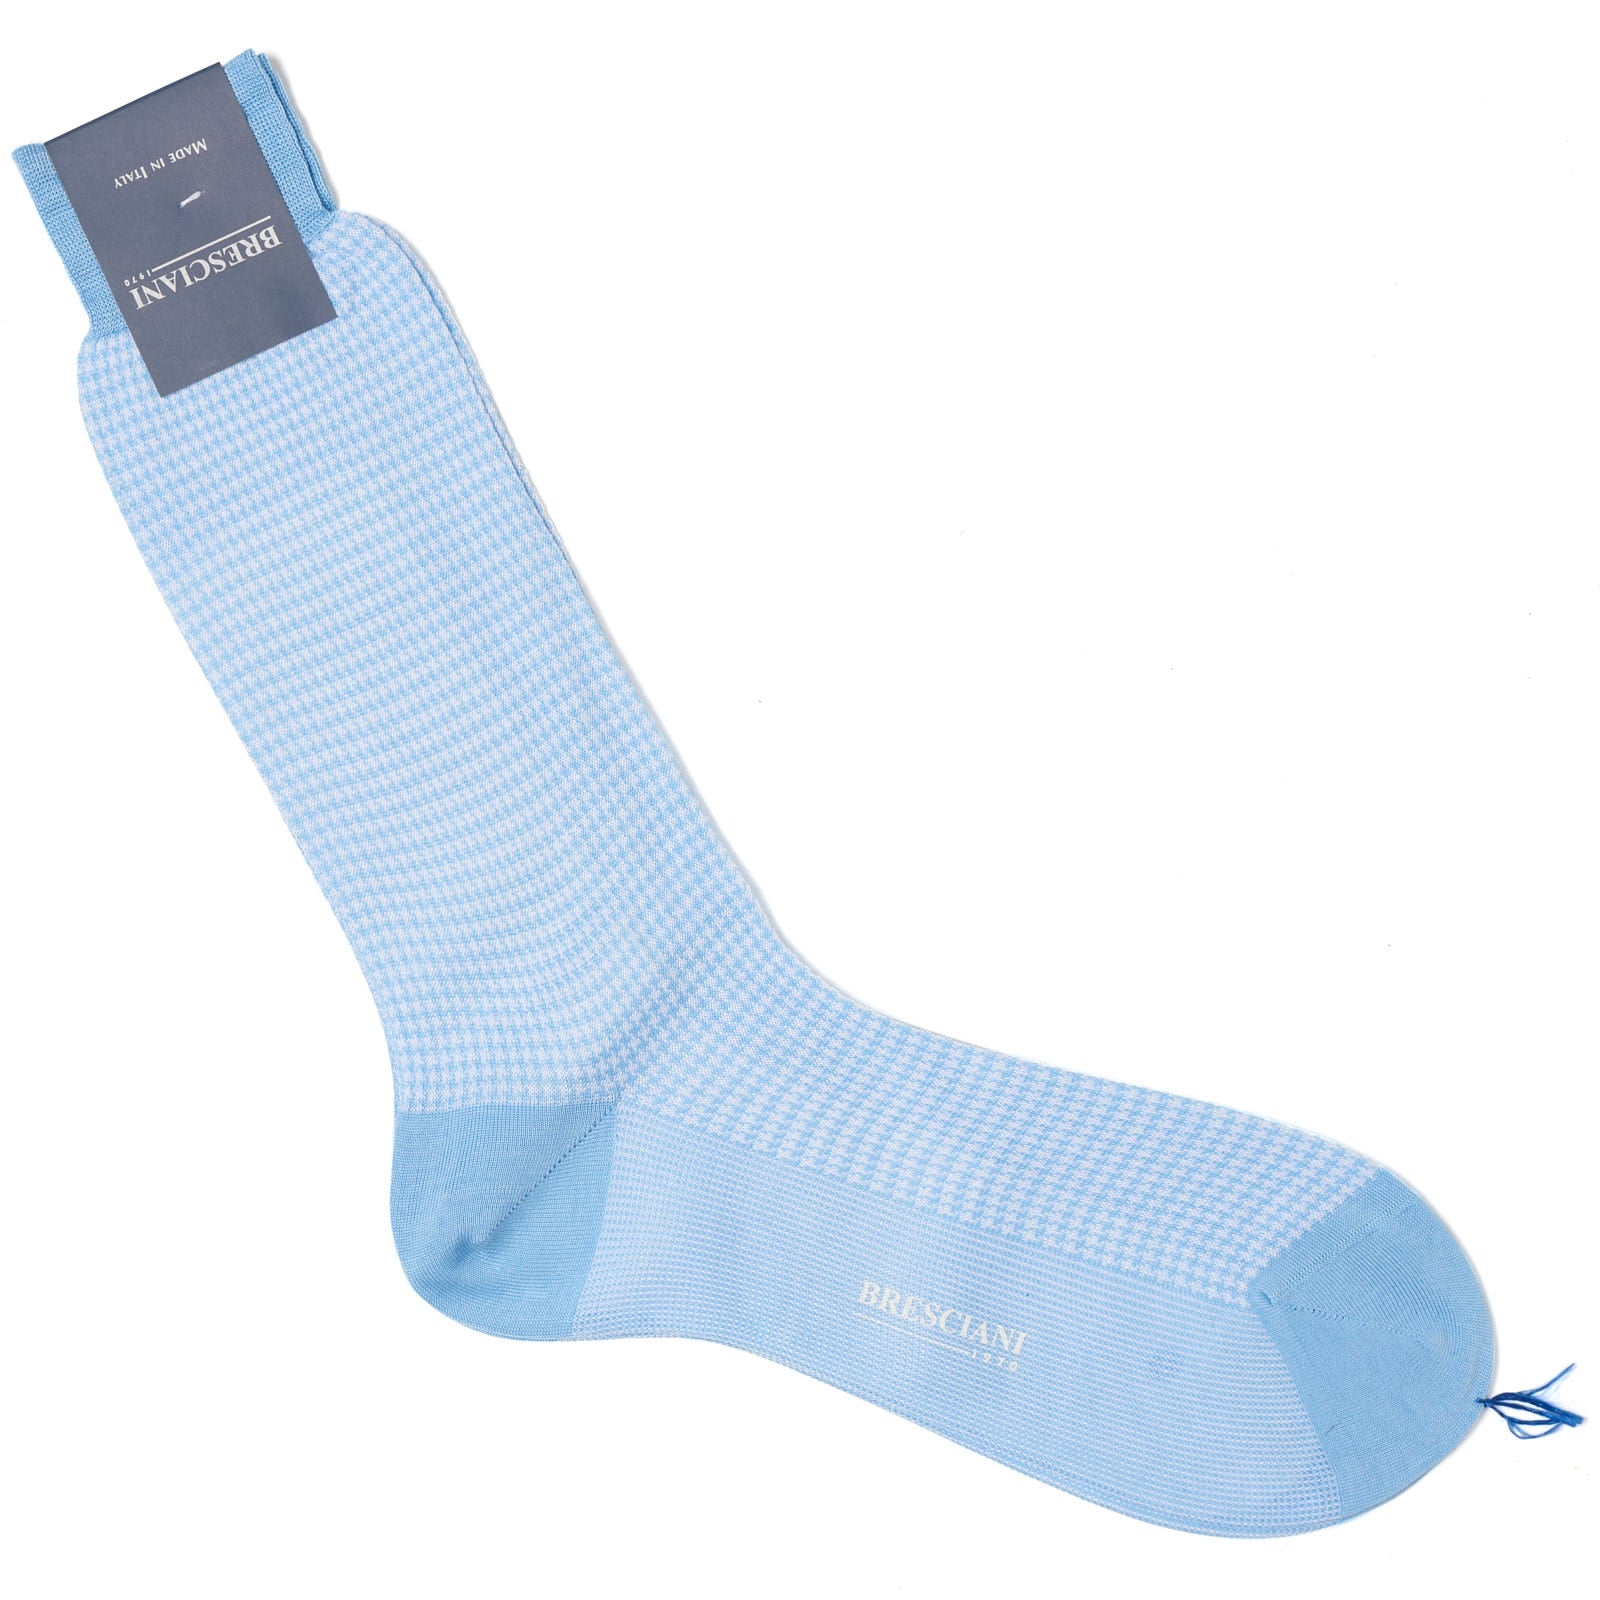 BRESCIANI Cotton Geometry Macro-Design Mid Calf Length Socks US M-L BRESCIANI